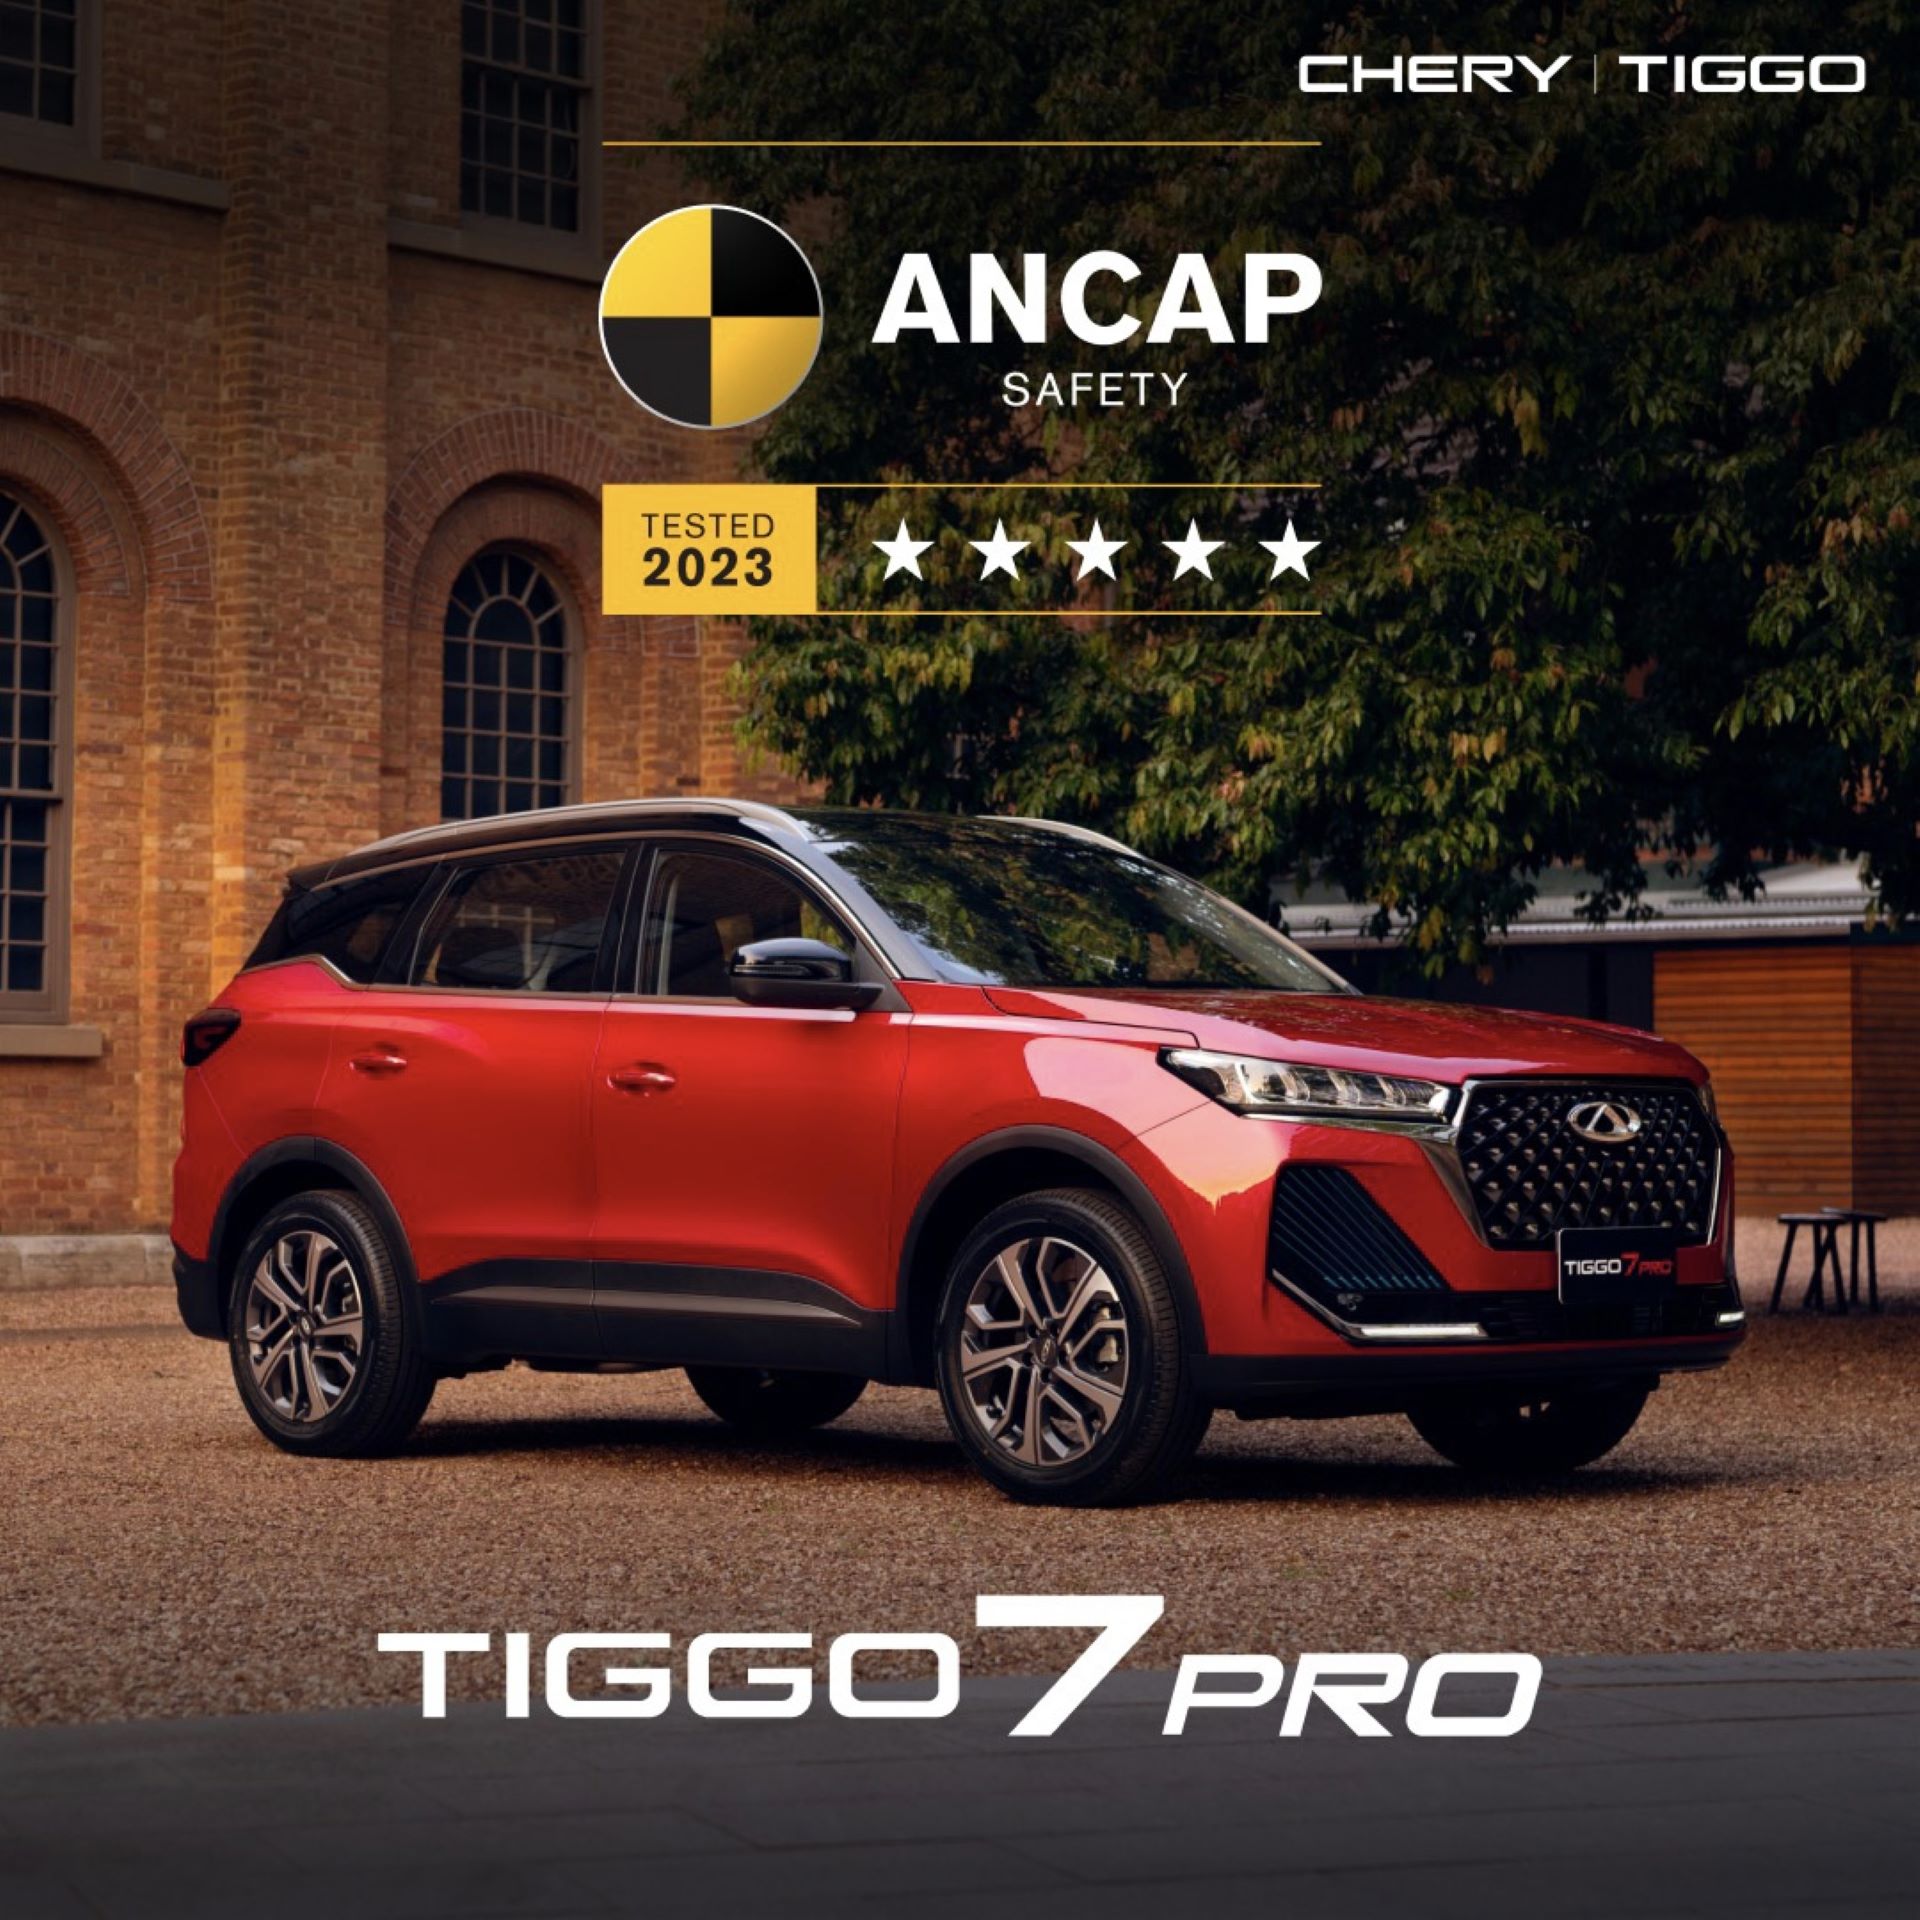 Chery’s TIGGO 7 PRO Receives Five-Star ANCAP Rating